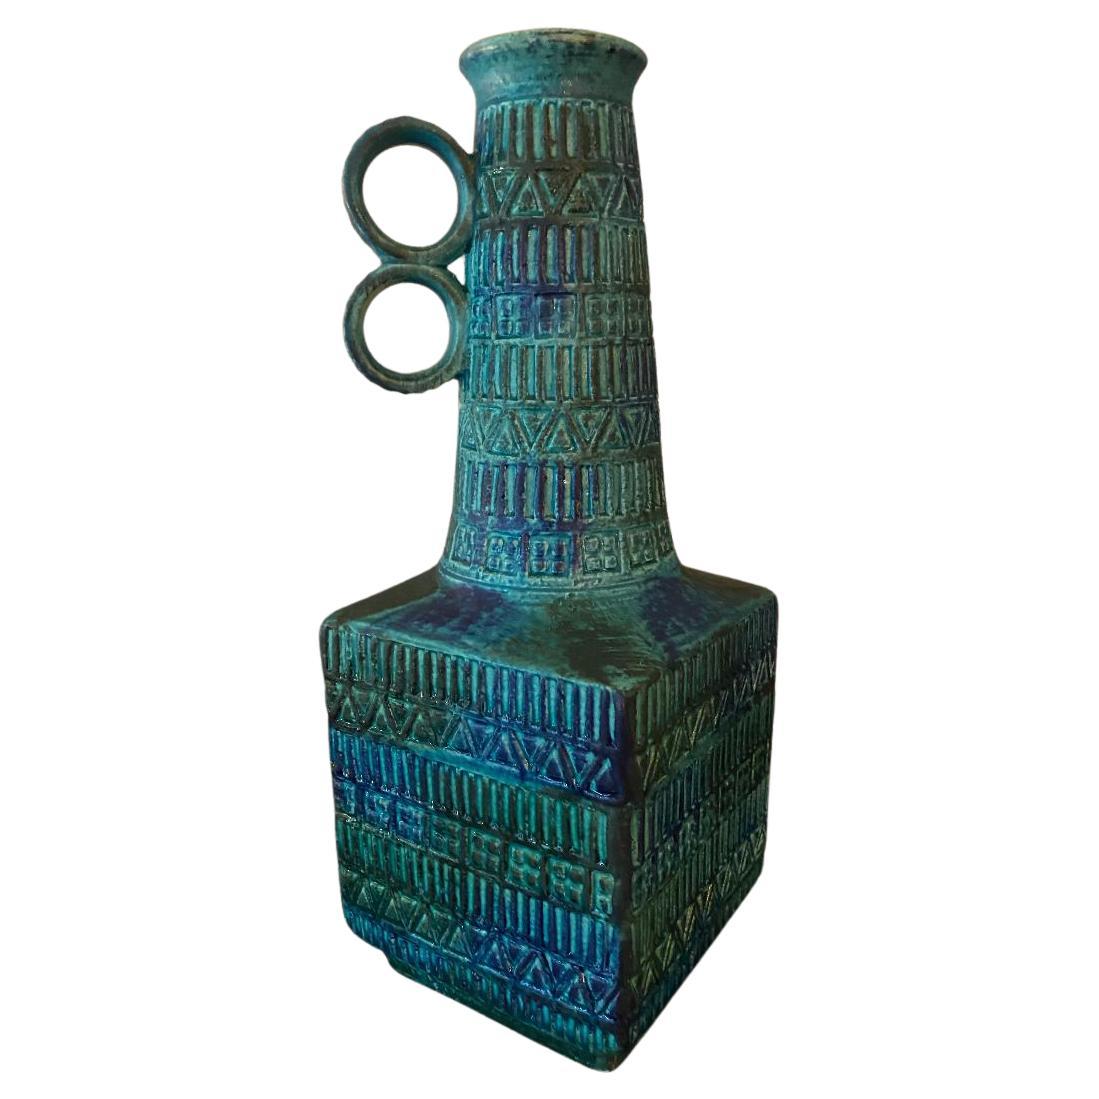 Bay Keramik Bodo Mans Vase aus der Jahrhundertmitte